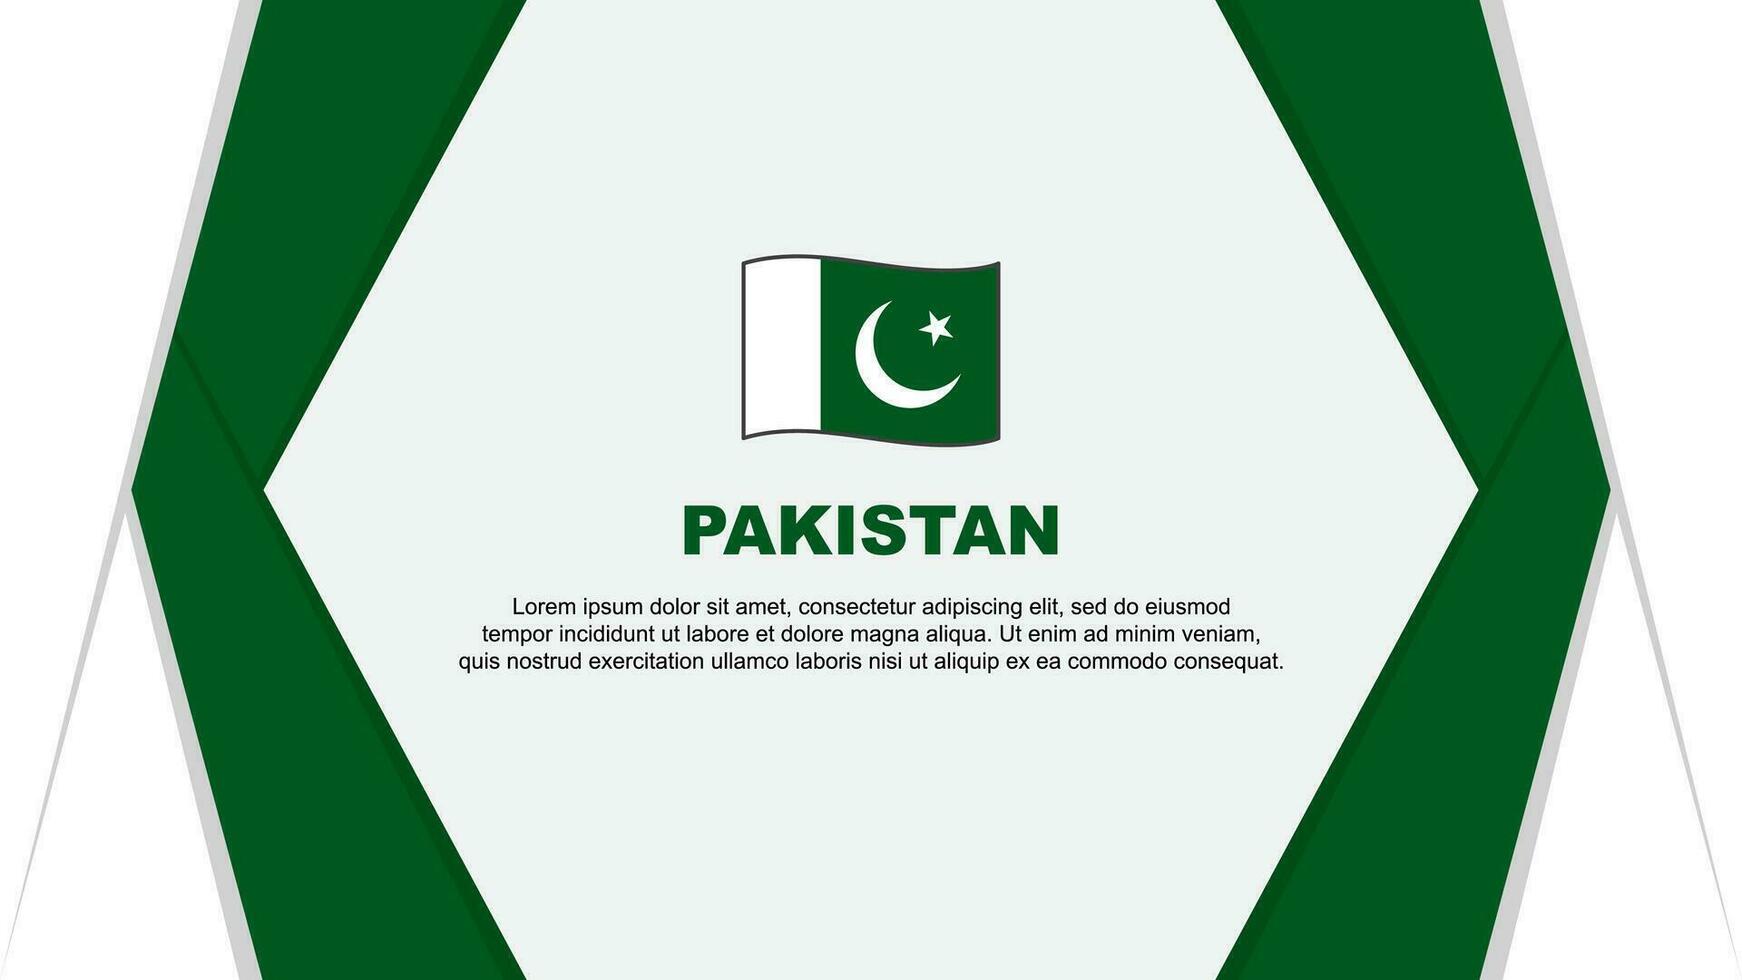 Pakistan Flag Abstract Background Design Template. Pakistan Independence Day Banner Cartoon Vector Illustration. Pakistan Background